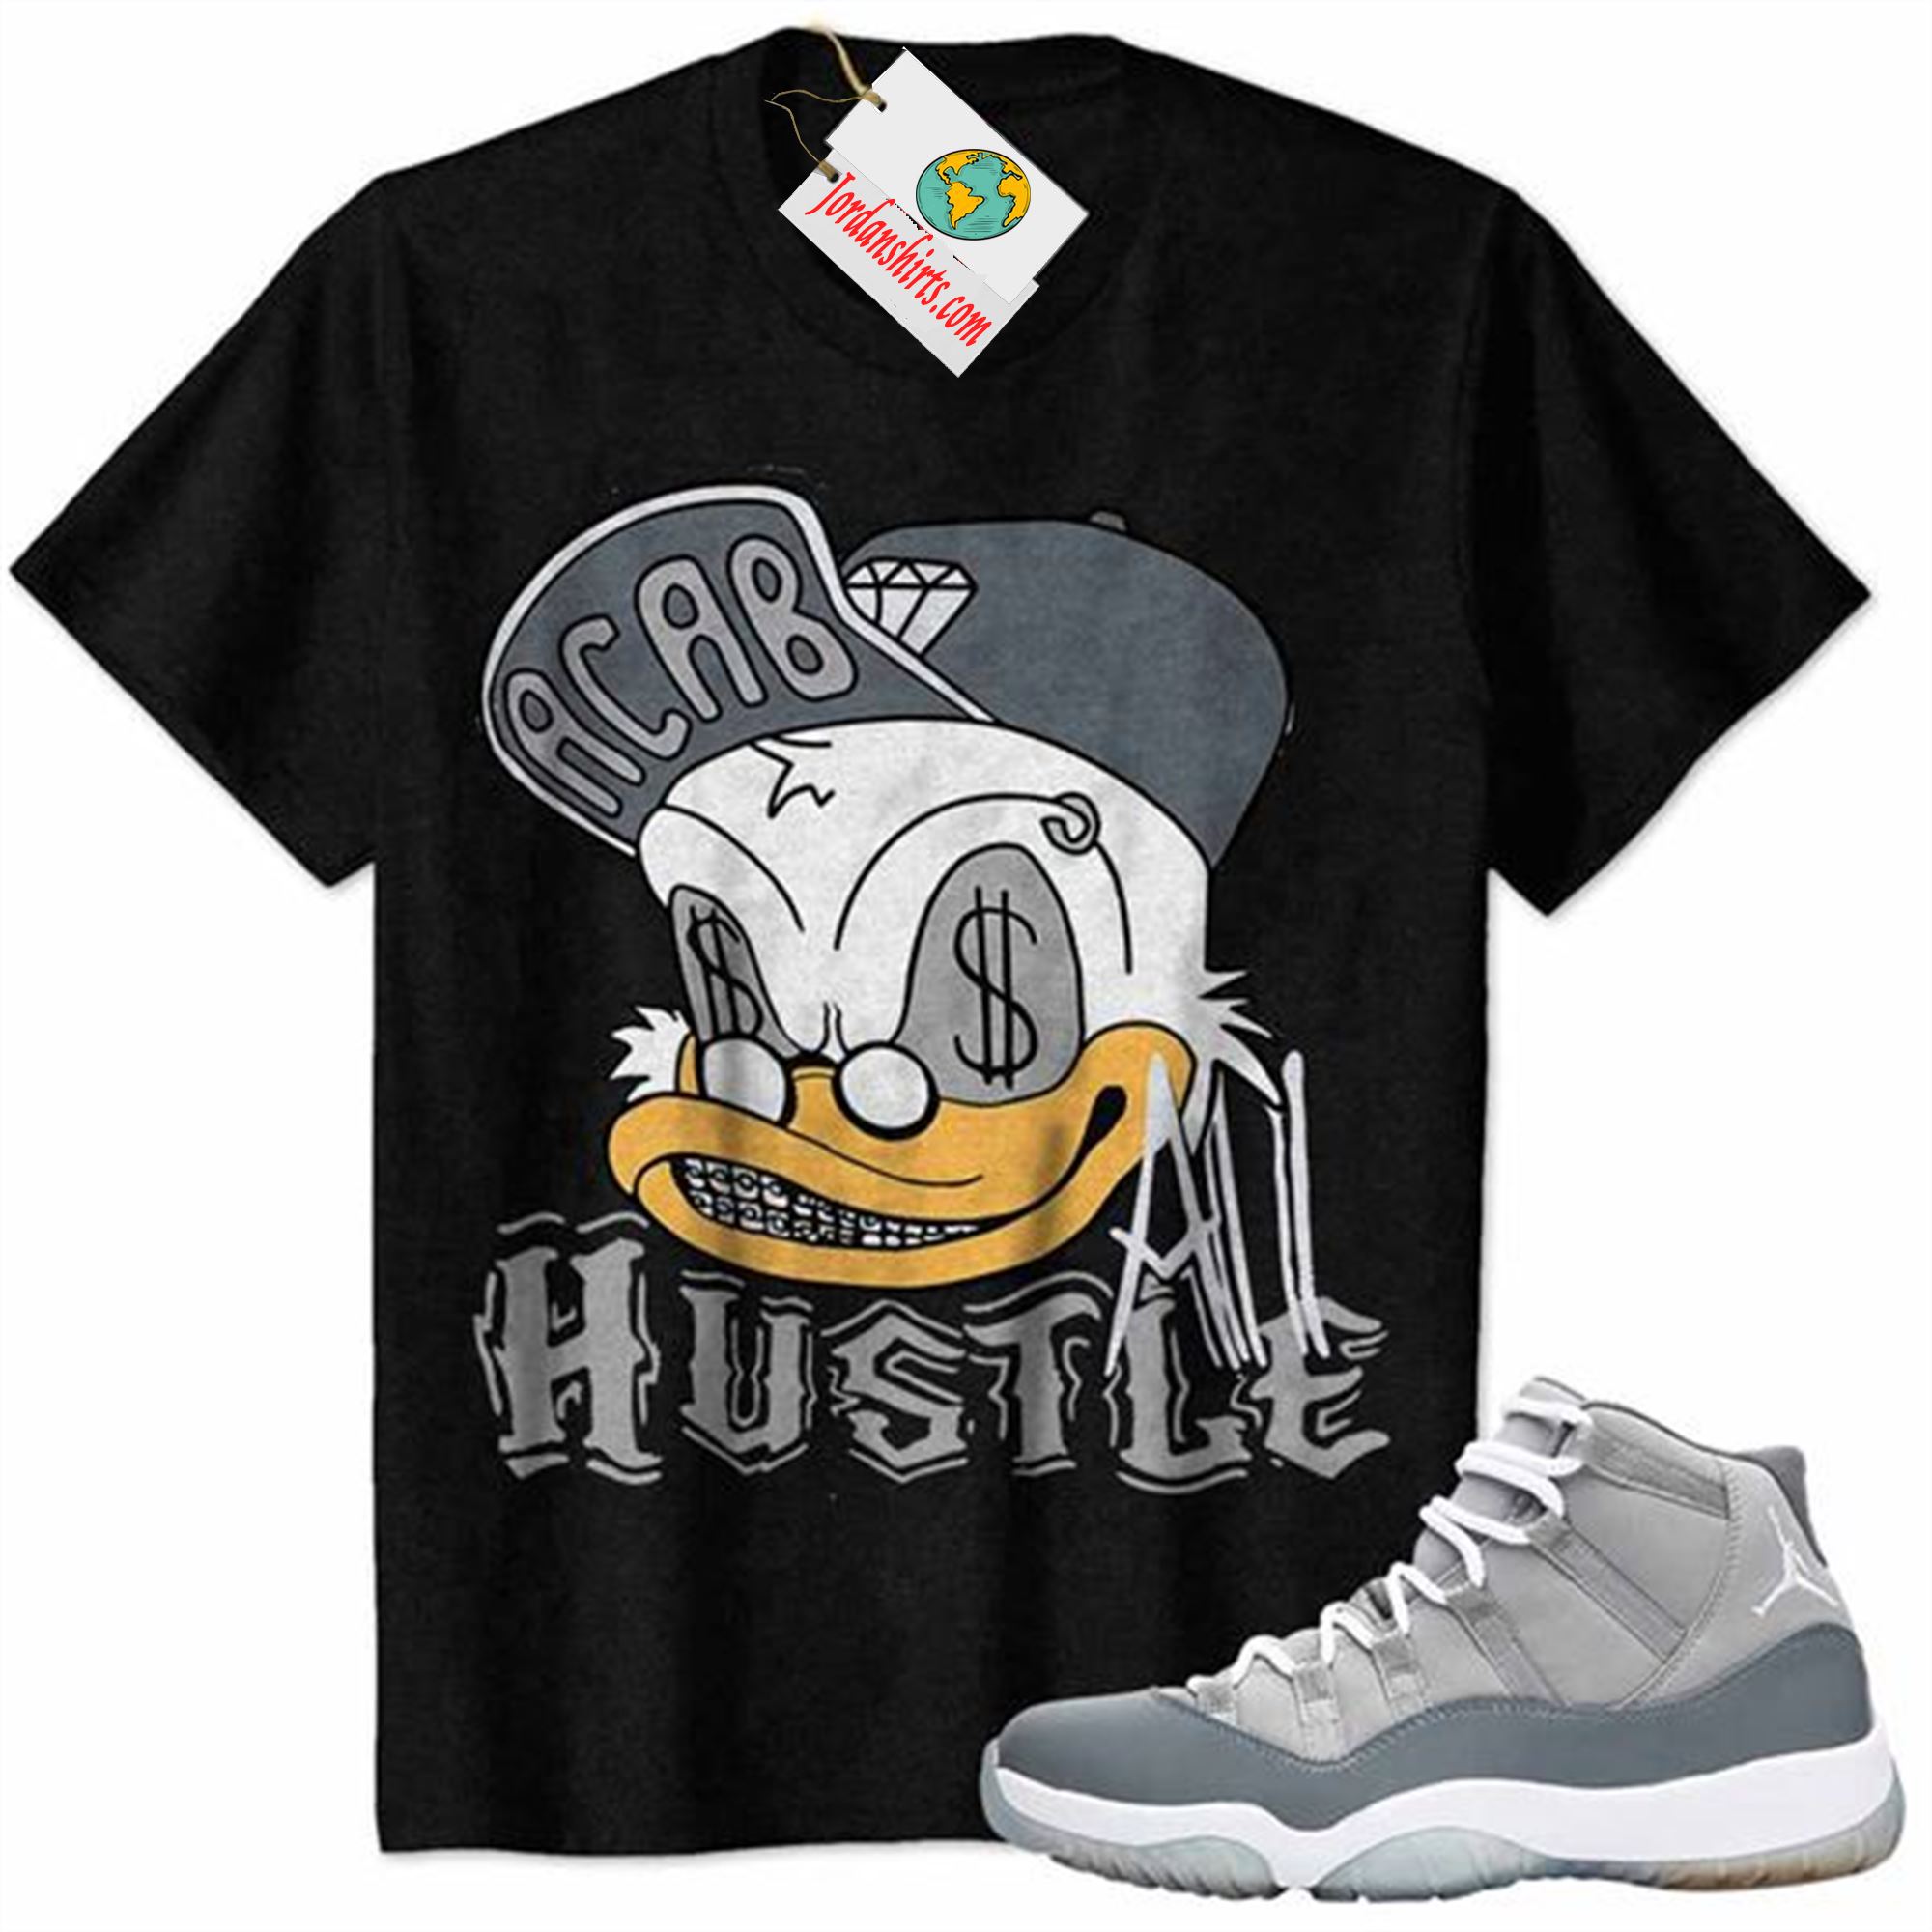 Jordan 11 Shirt, All Hustle Duck Black Air Jordan 11 Cool Grey 11s Size Up To 5xl